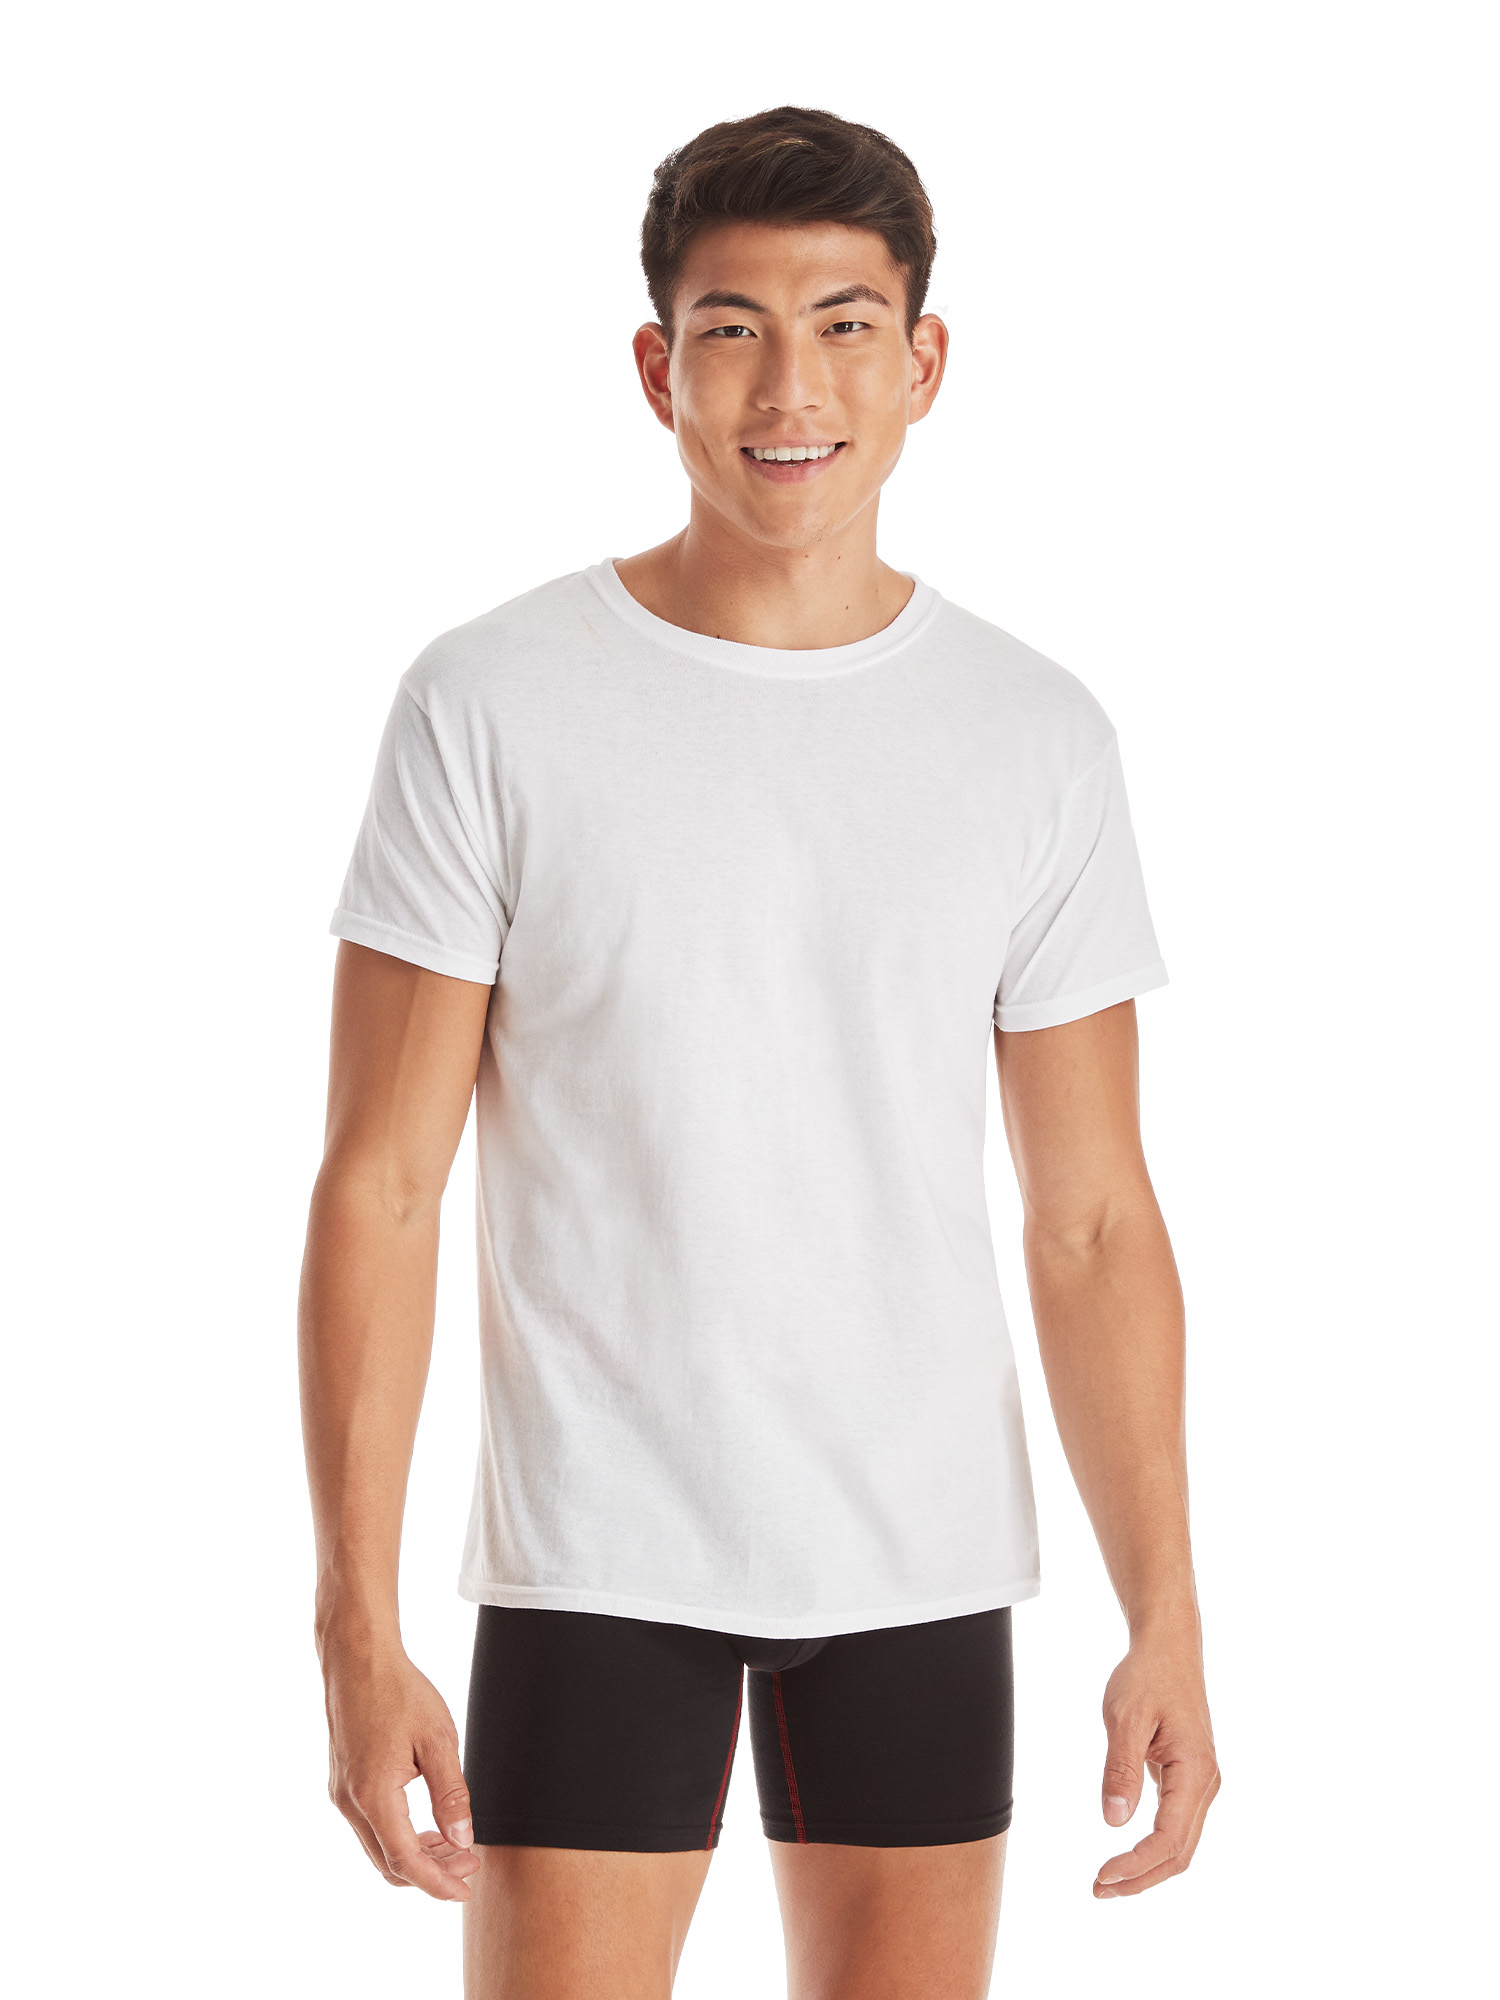 Hanes Men's Super Value Pack White Crew T-Shirt Undershirts, 10 Pack - image 4 of 10